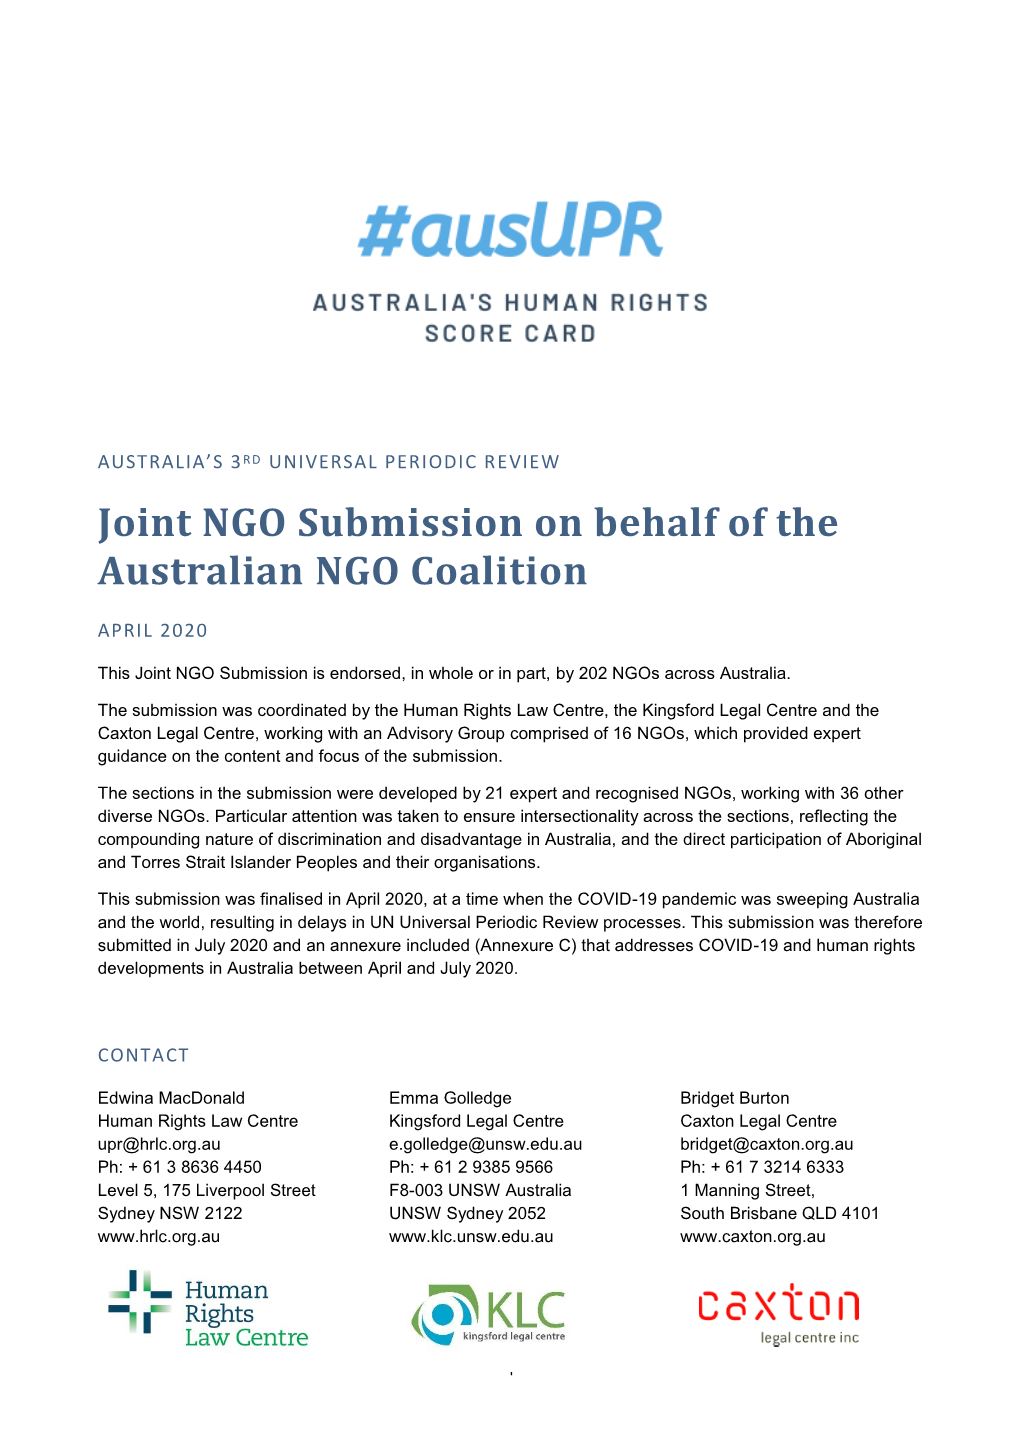 Joint NGO Submission on Behalf of the Australian NGO Coalition